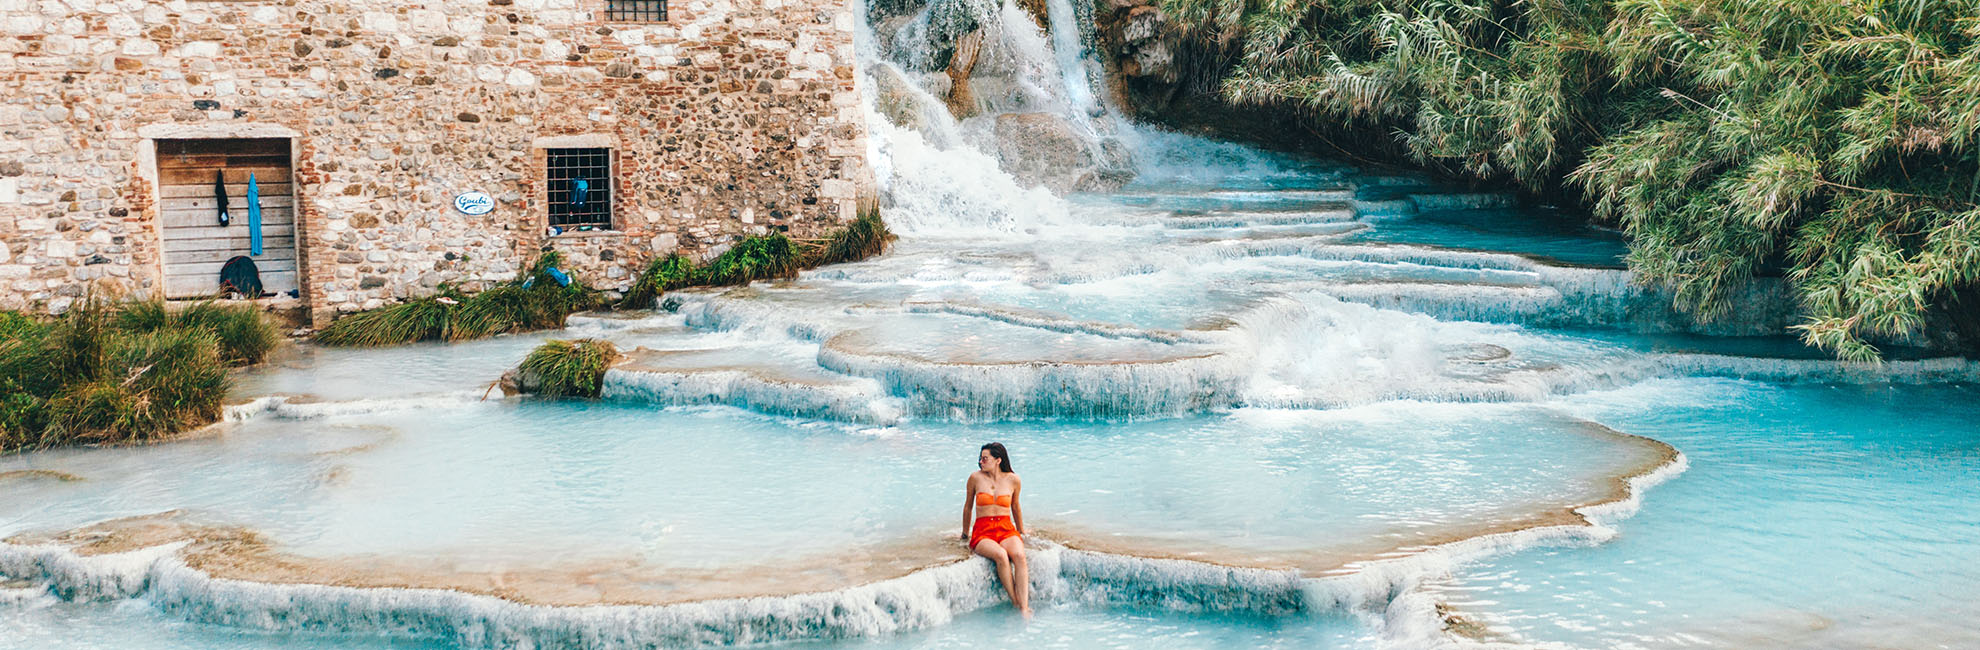 Terme di Saturnia hot springs, Italy